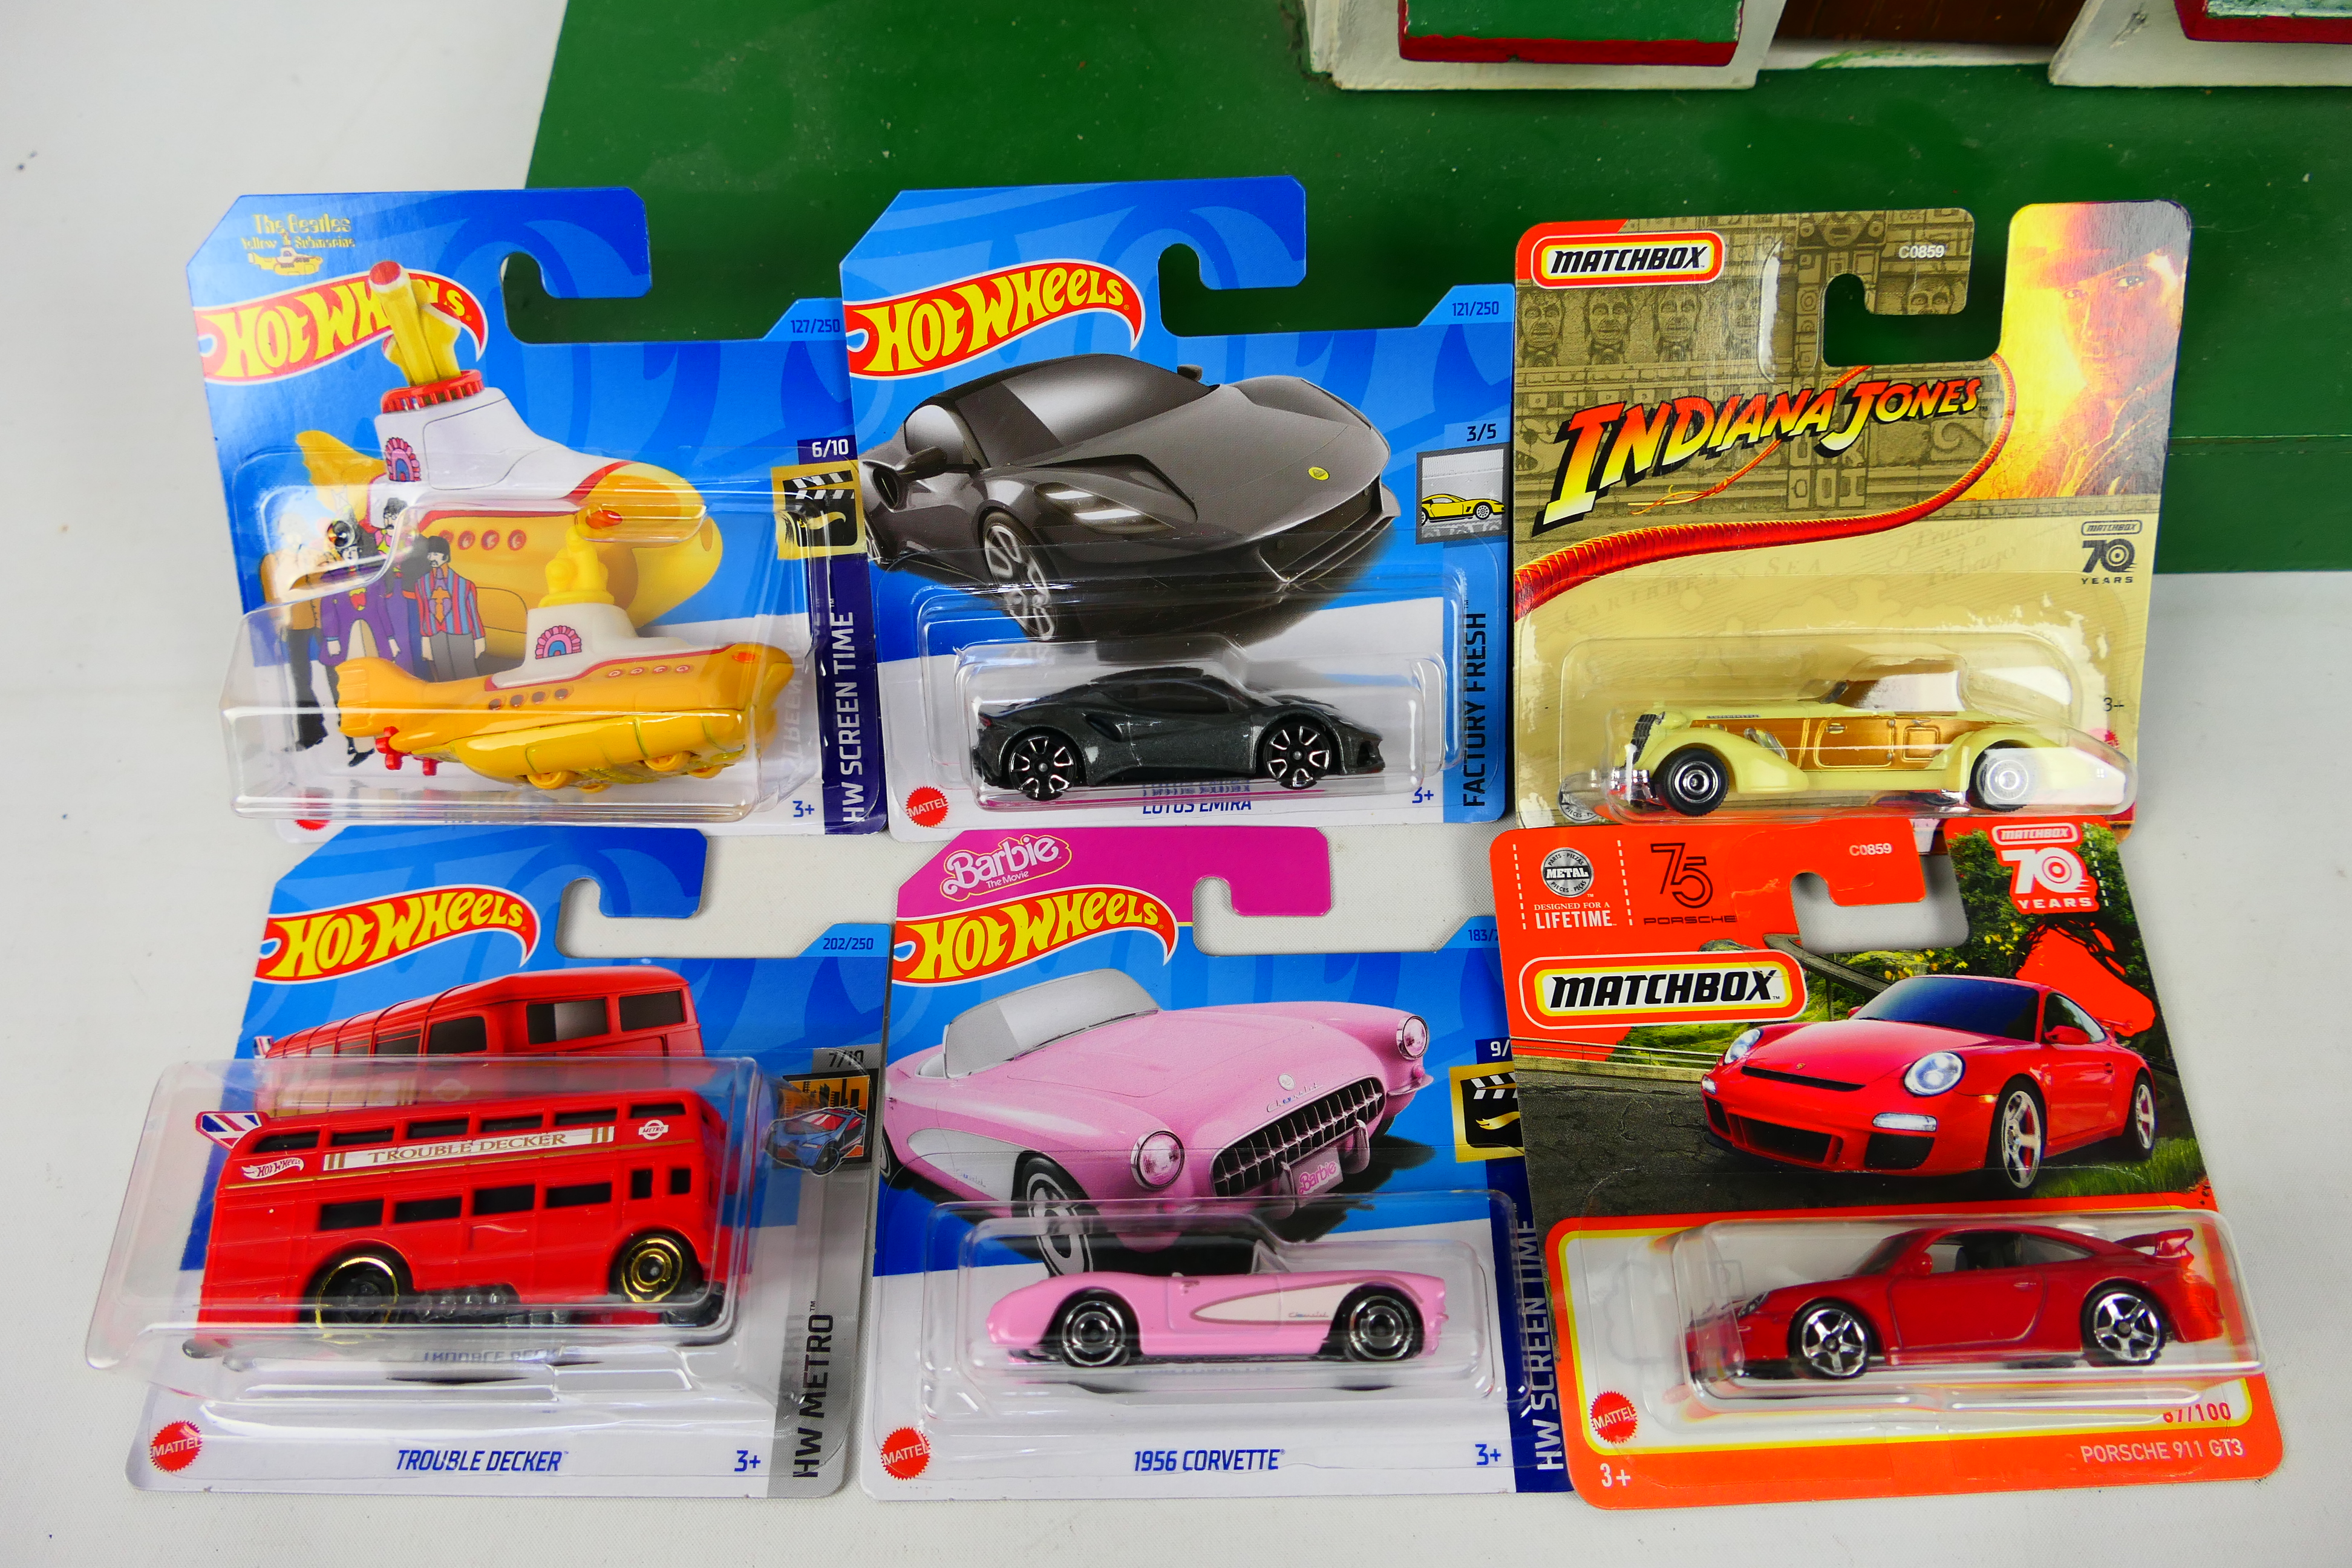 Mattel - HotWheels - Matchbox - A collection of 6 vehicles; - Image 3 of 3